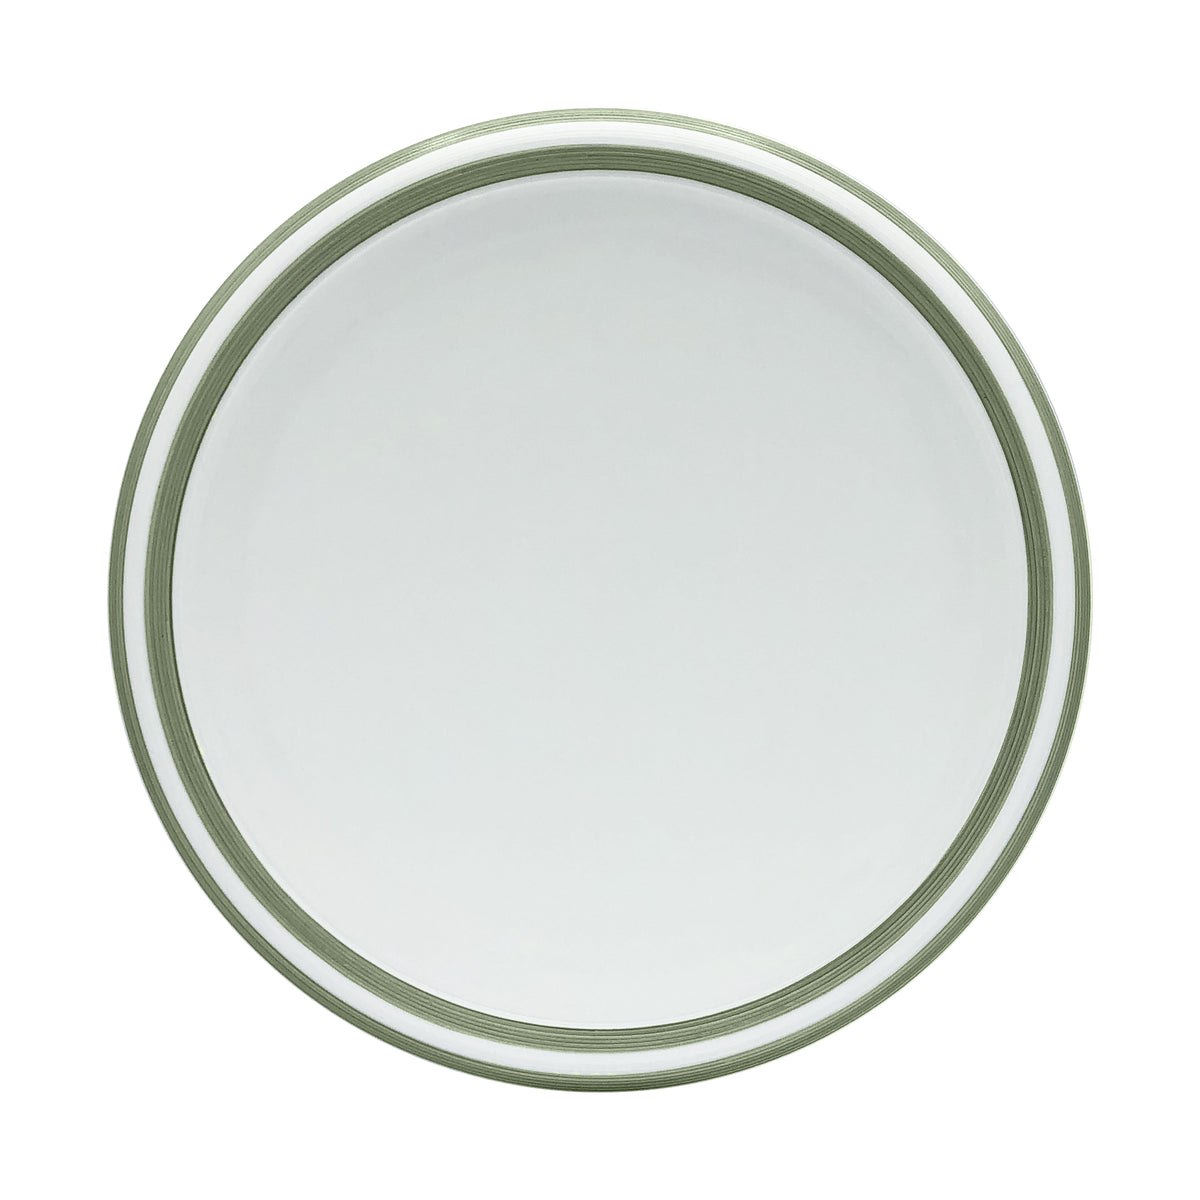 HEMISPHERE Striped Khaki Green - Dinner plate Bubble